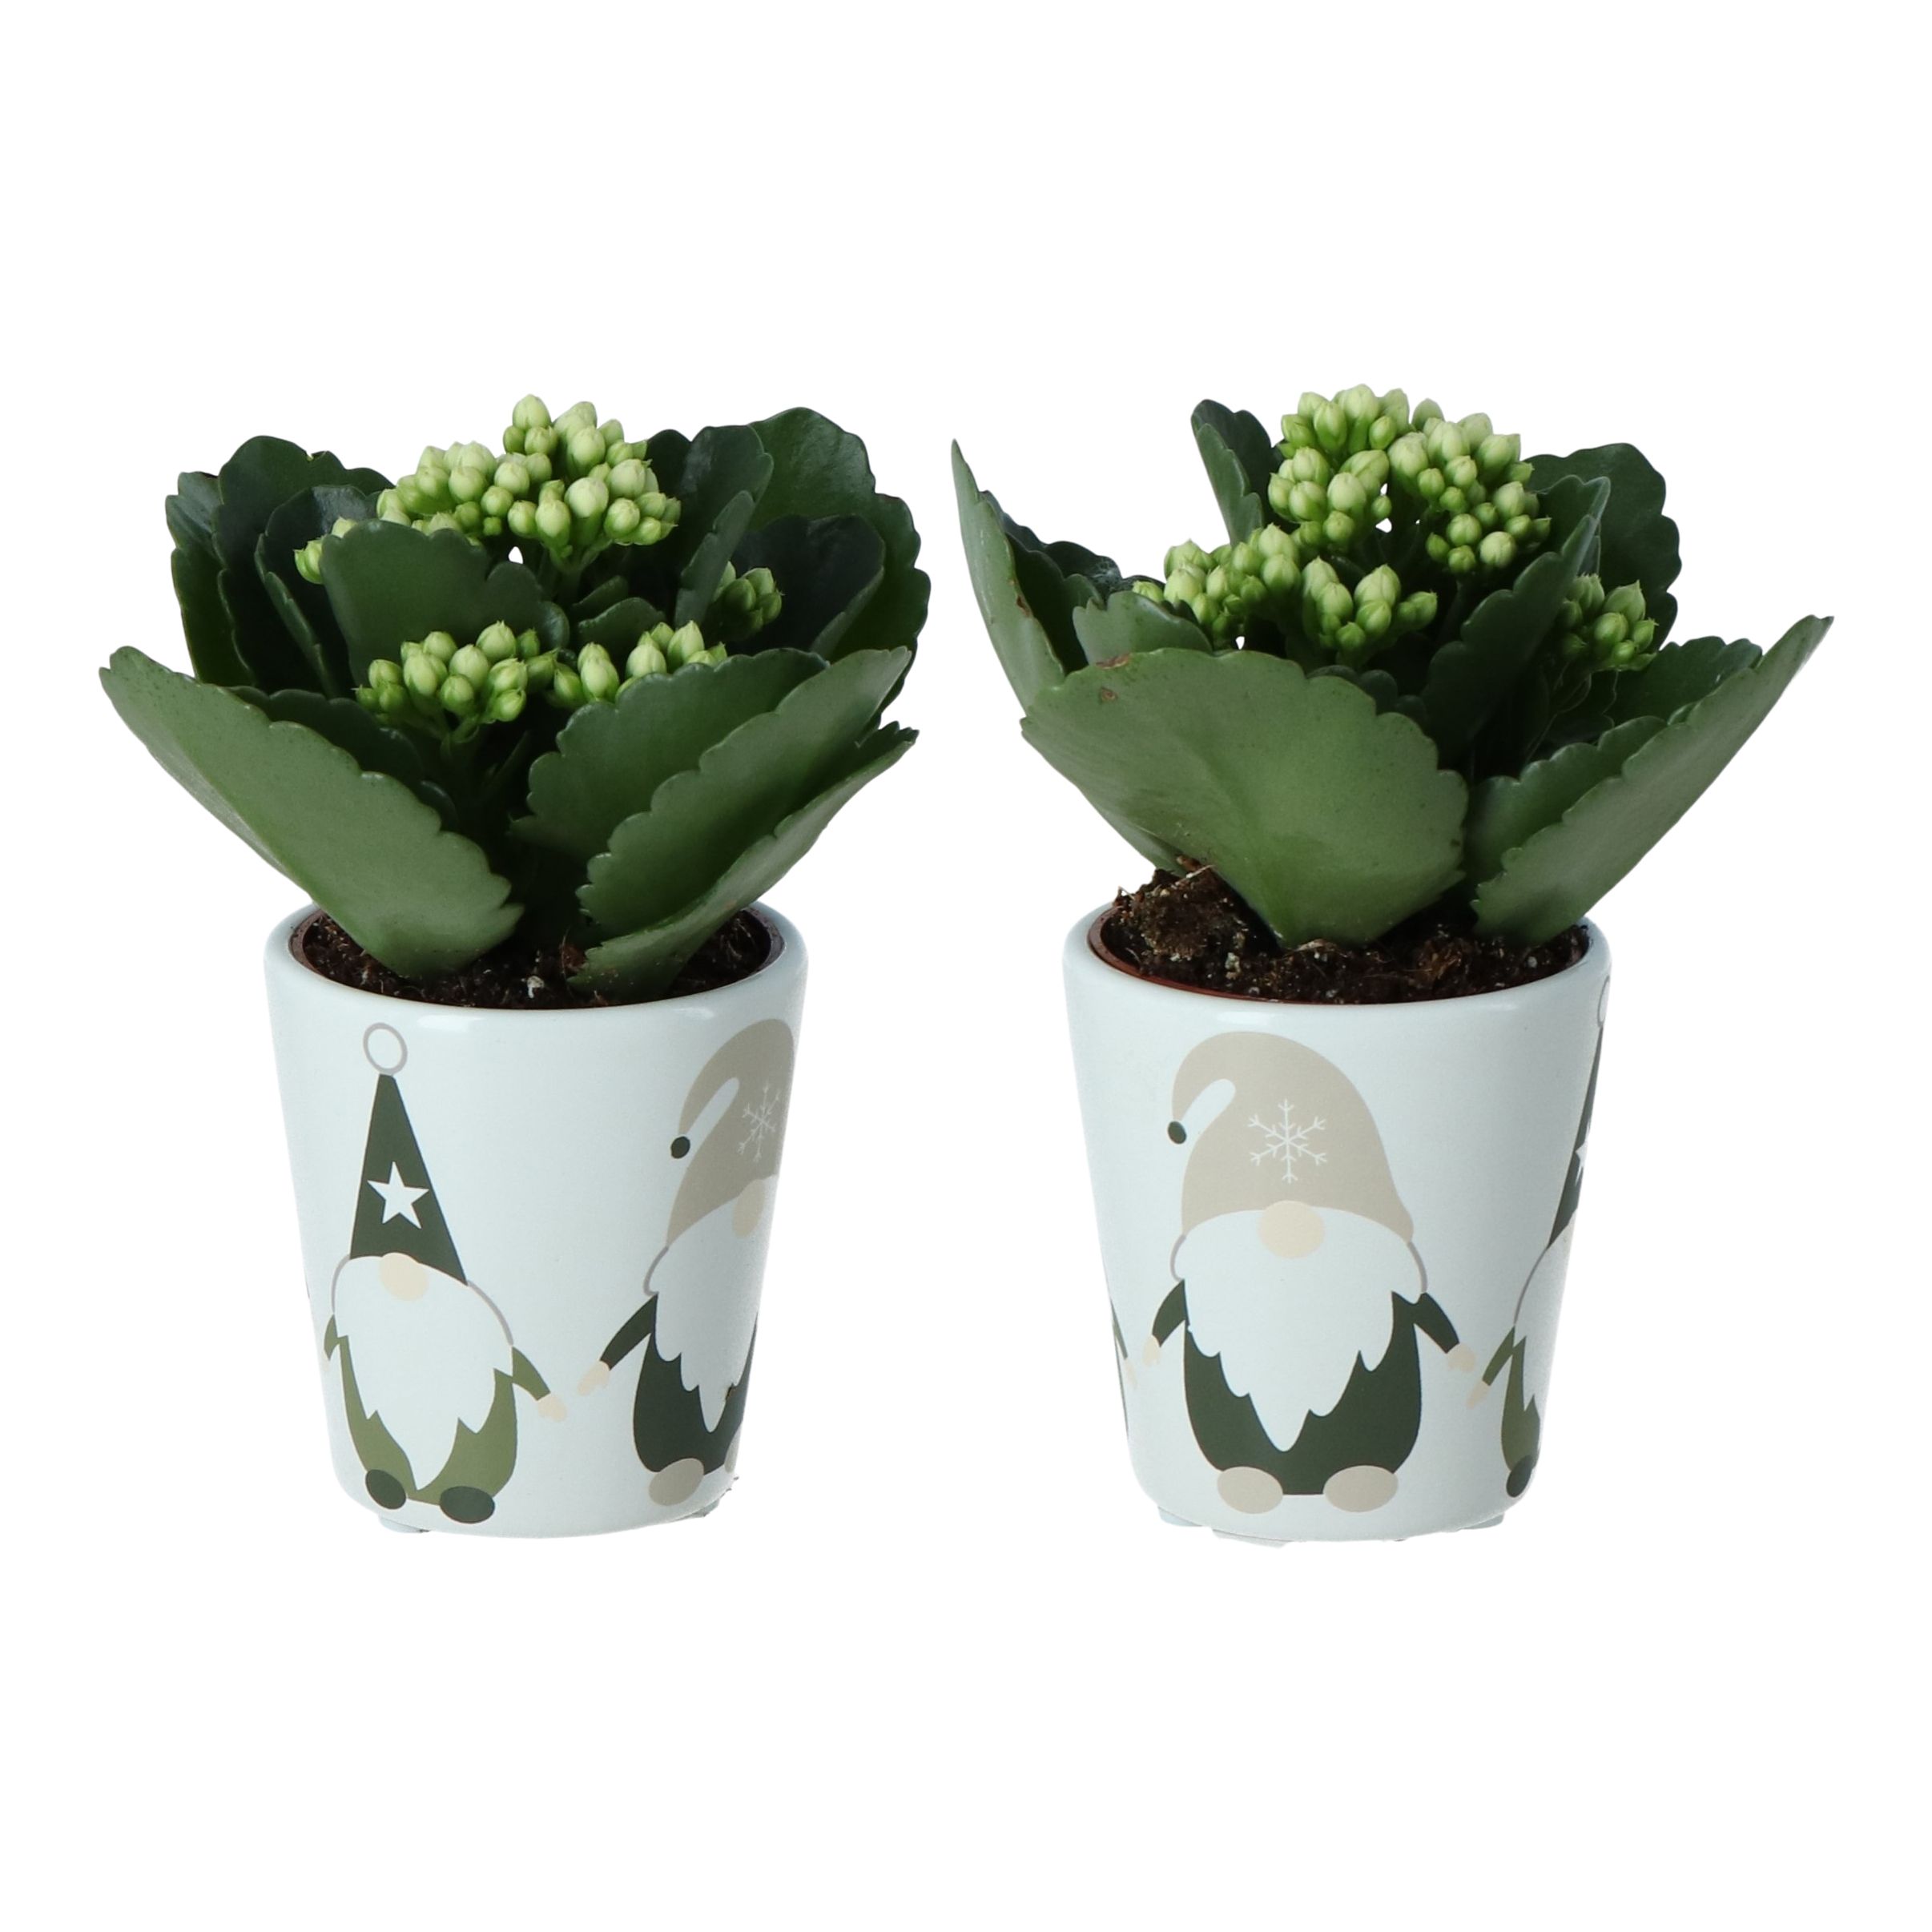 Green Succulent in 6cm Terracotta Gonk Ceramic Decorative pot